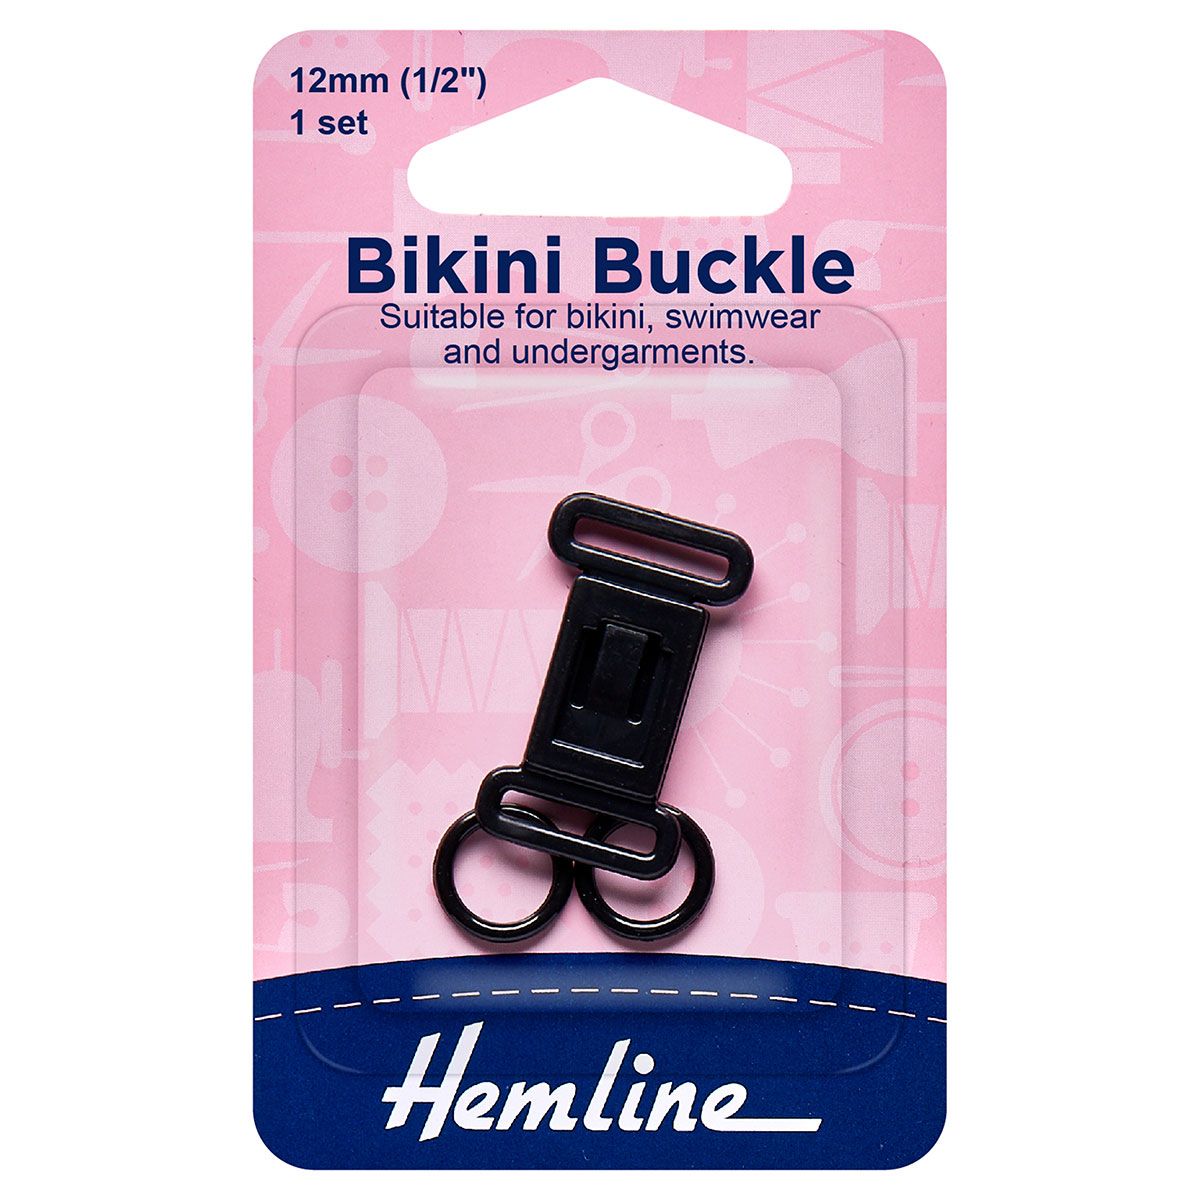 12mm Black Bikini Buckle Set Hemline 